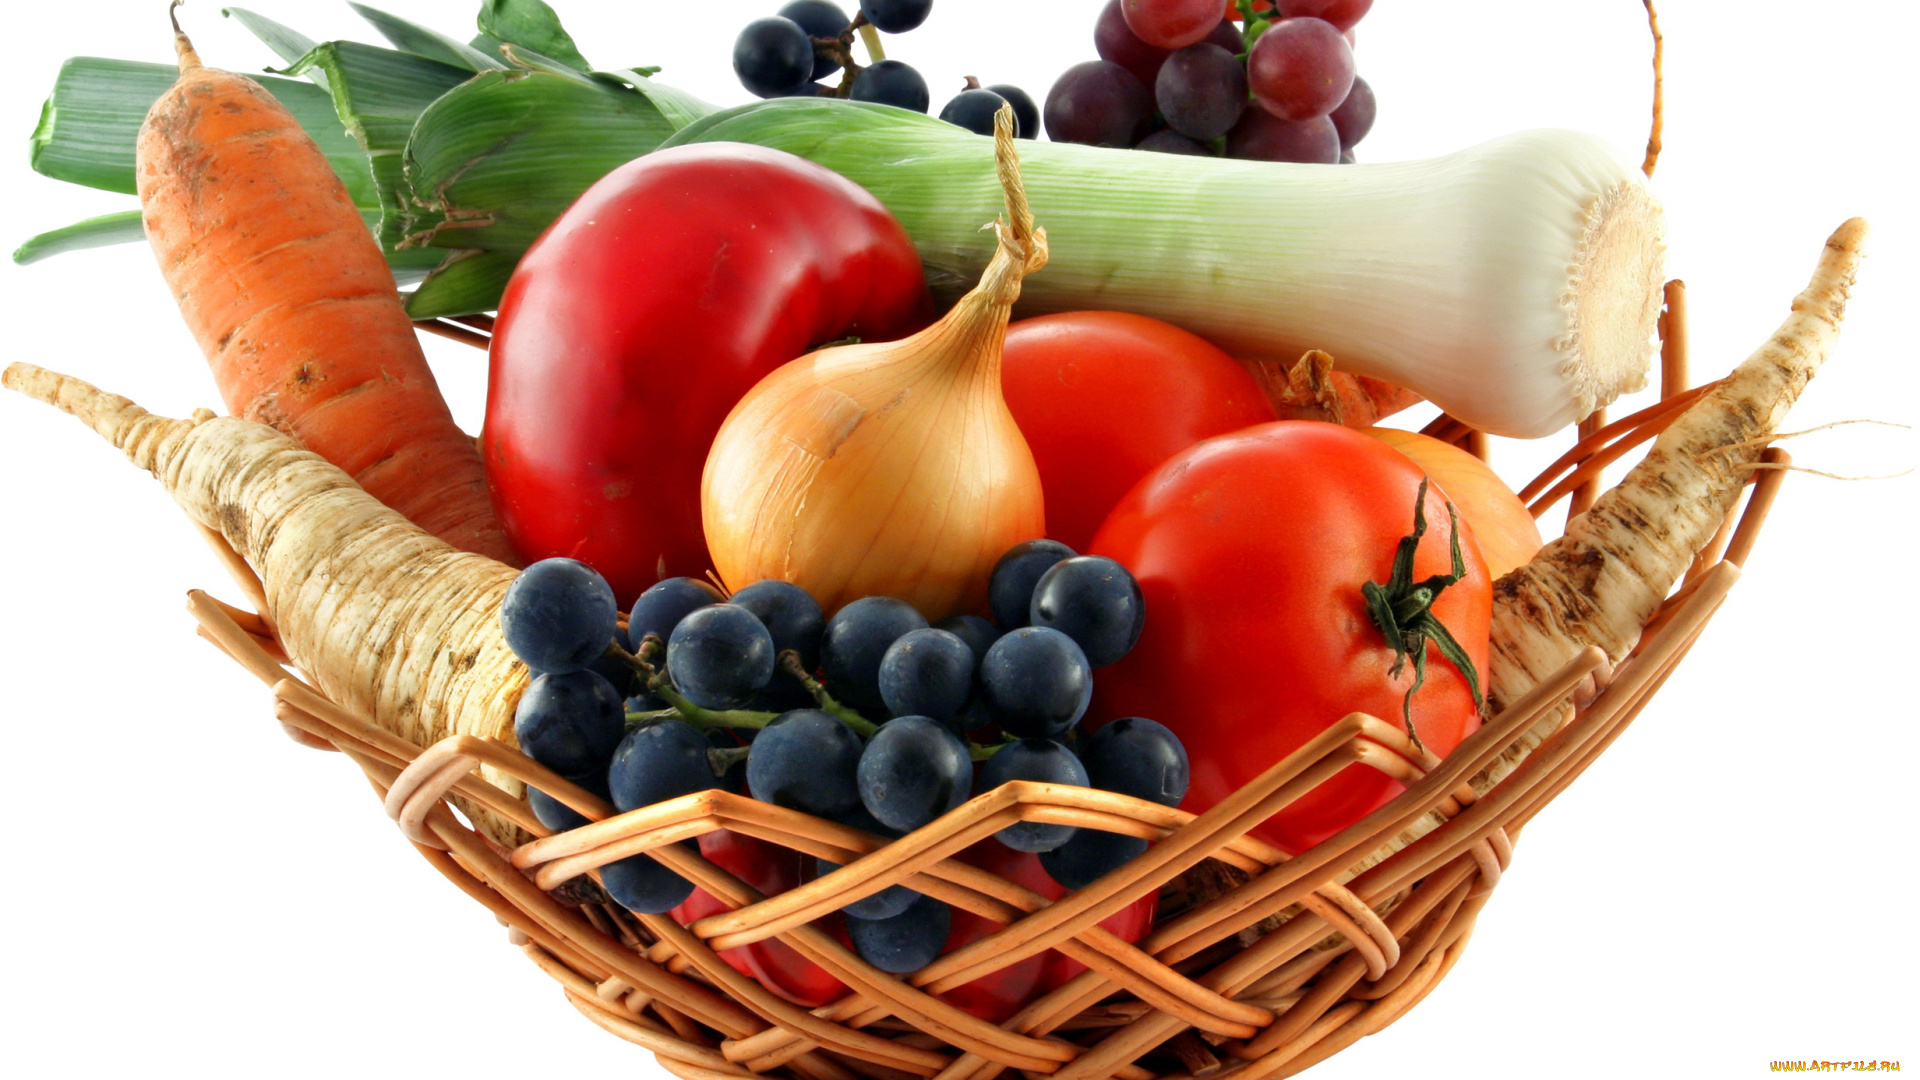 еда, фрукты, овощи, вместе, морковь, виноград, корзинка, помидоры, томаты